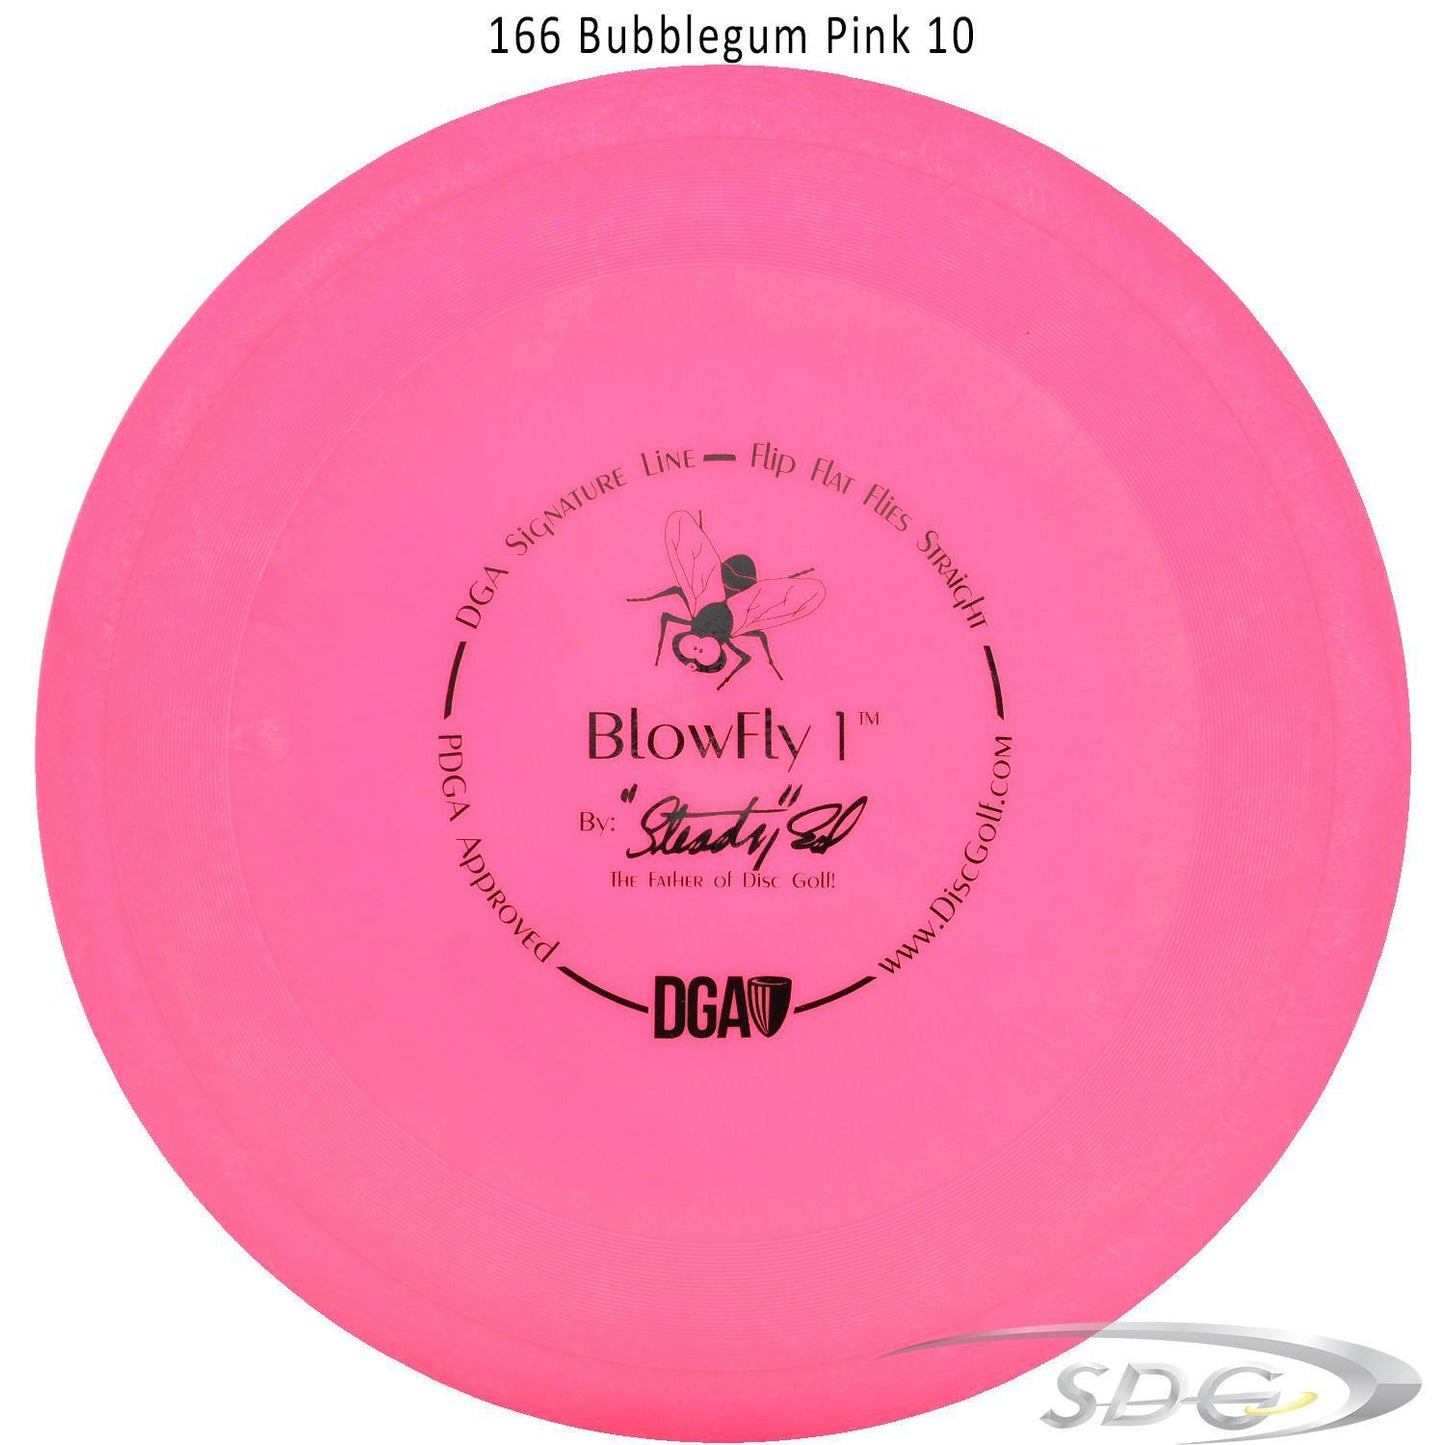 dga-signature-line-blowfly-1-disc-golf-putter 166 Bubblegum Pink 10 